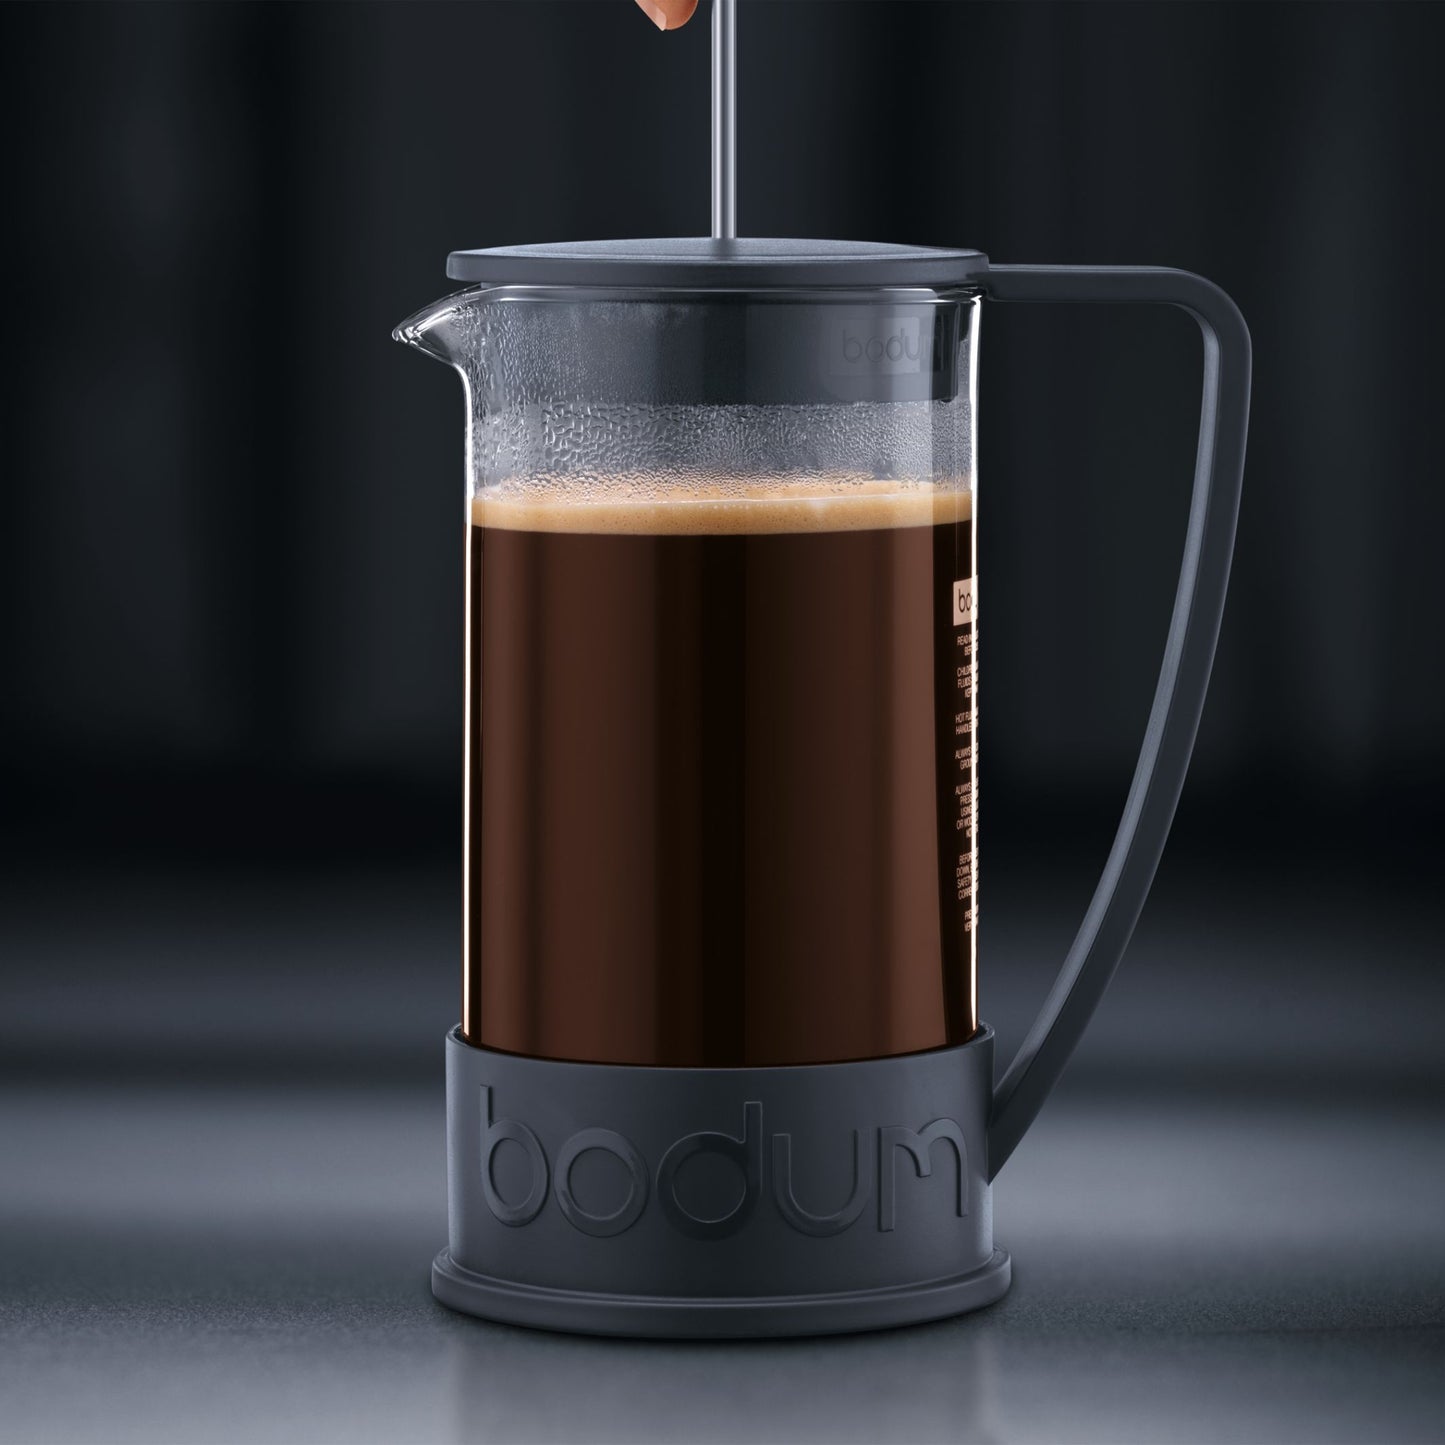 Bodum Brazil French Press Coffee Maker, 34 Ounce, Black